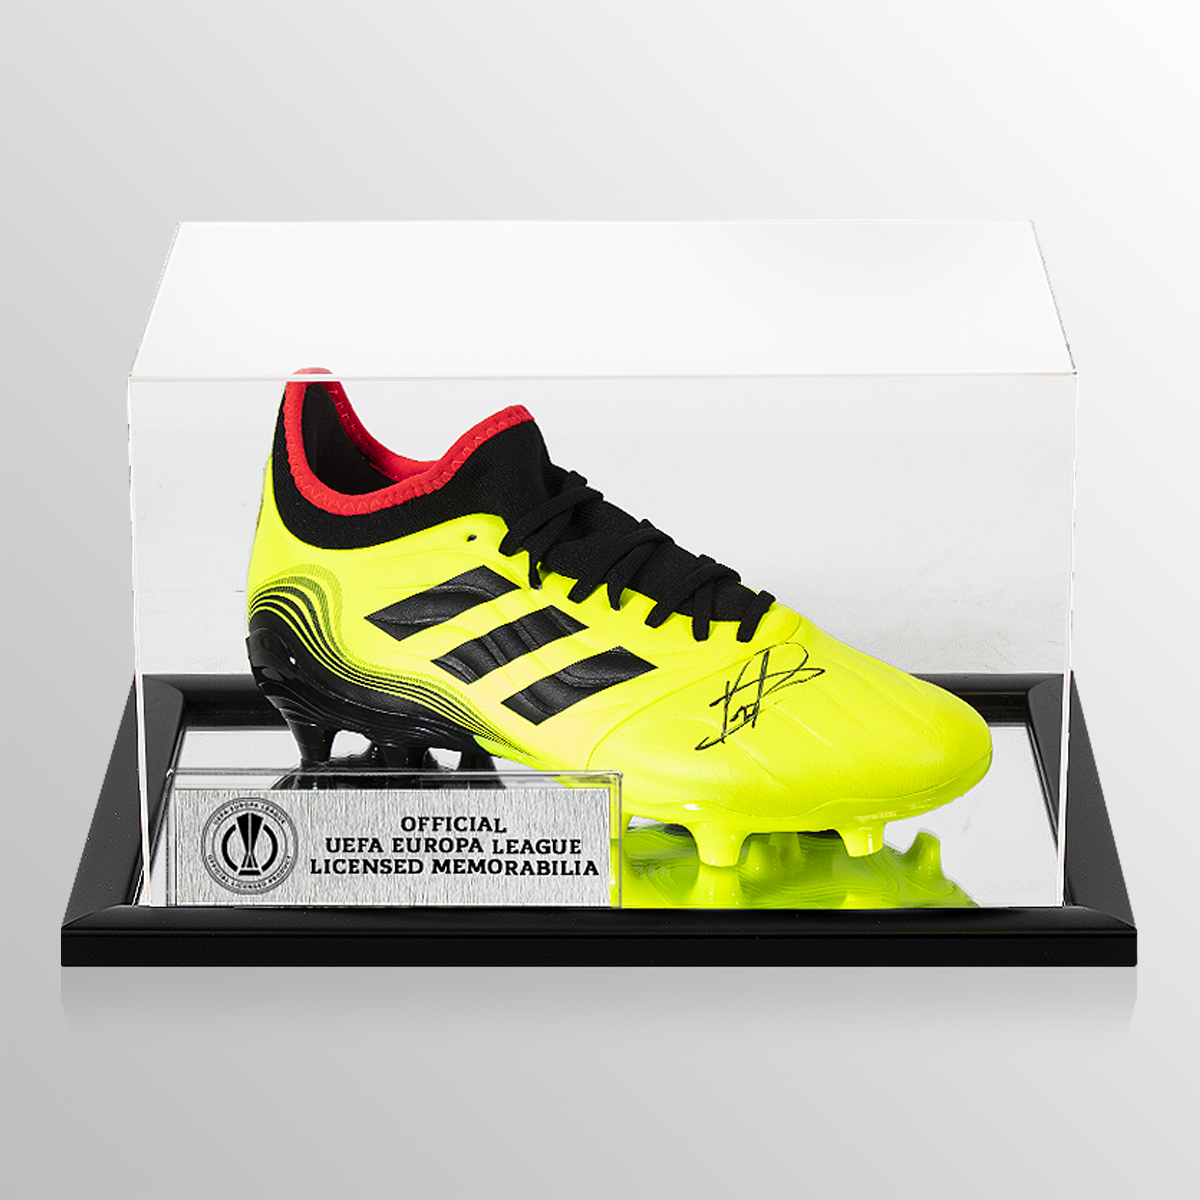 Pedri Official UEFA Europa League Signed Yellow Adidas Copa Sense .3 FG Boot In Acrylic Case